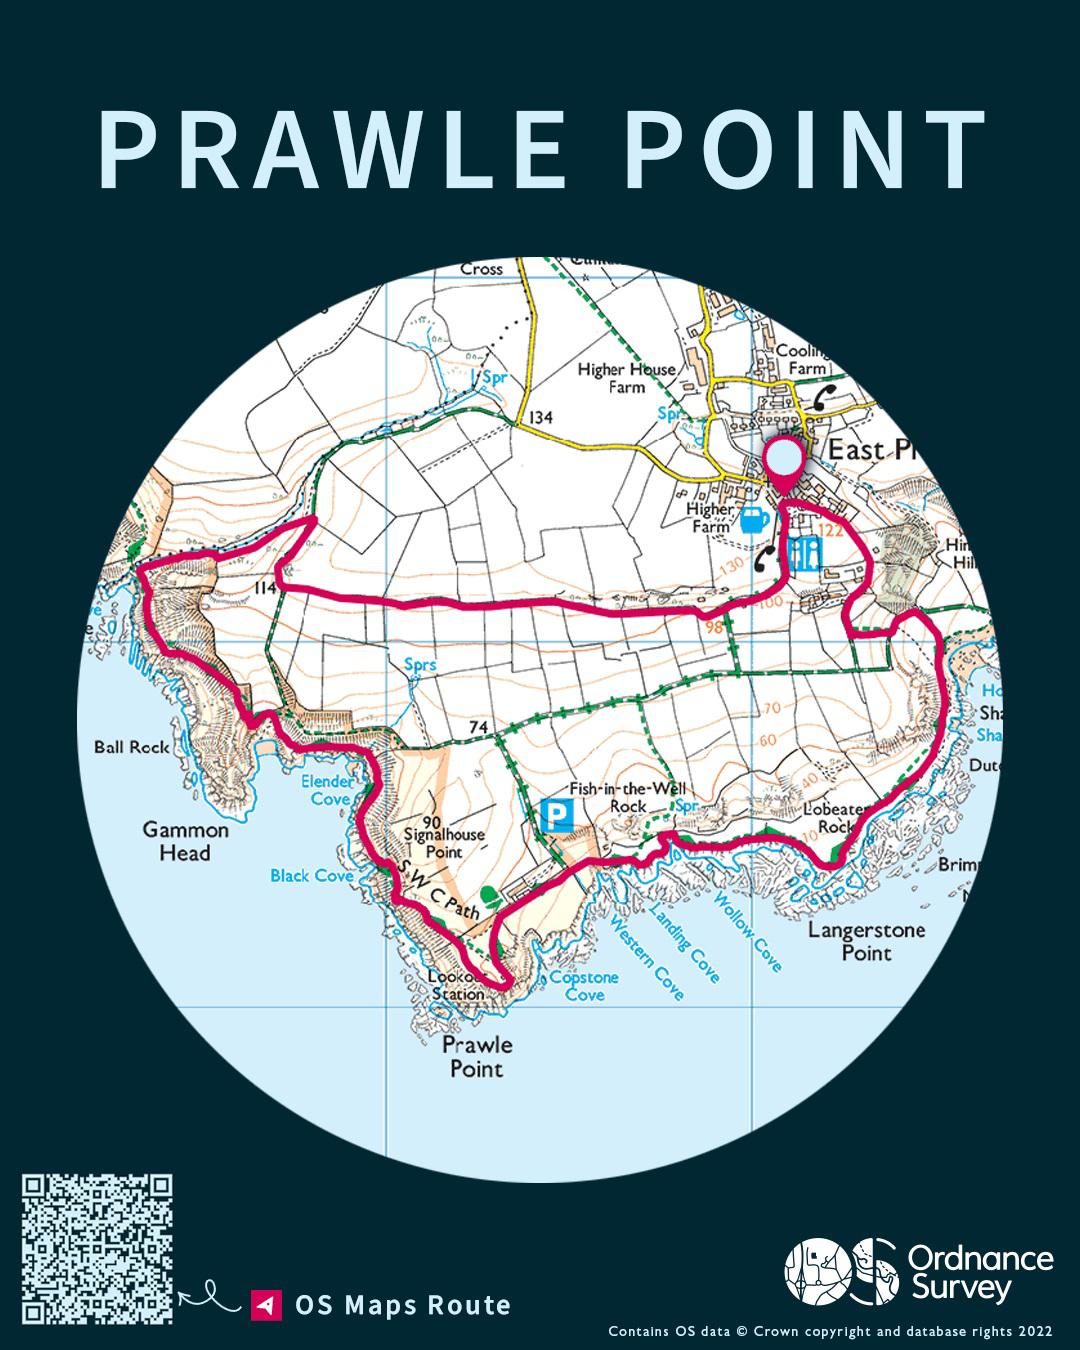 My favourite route: Prawle Point, Katherine Featherstone